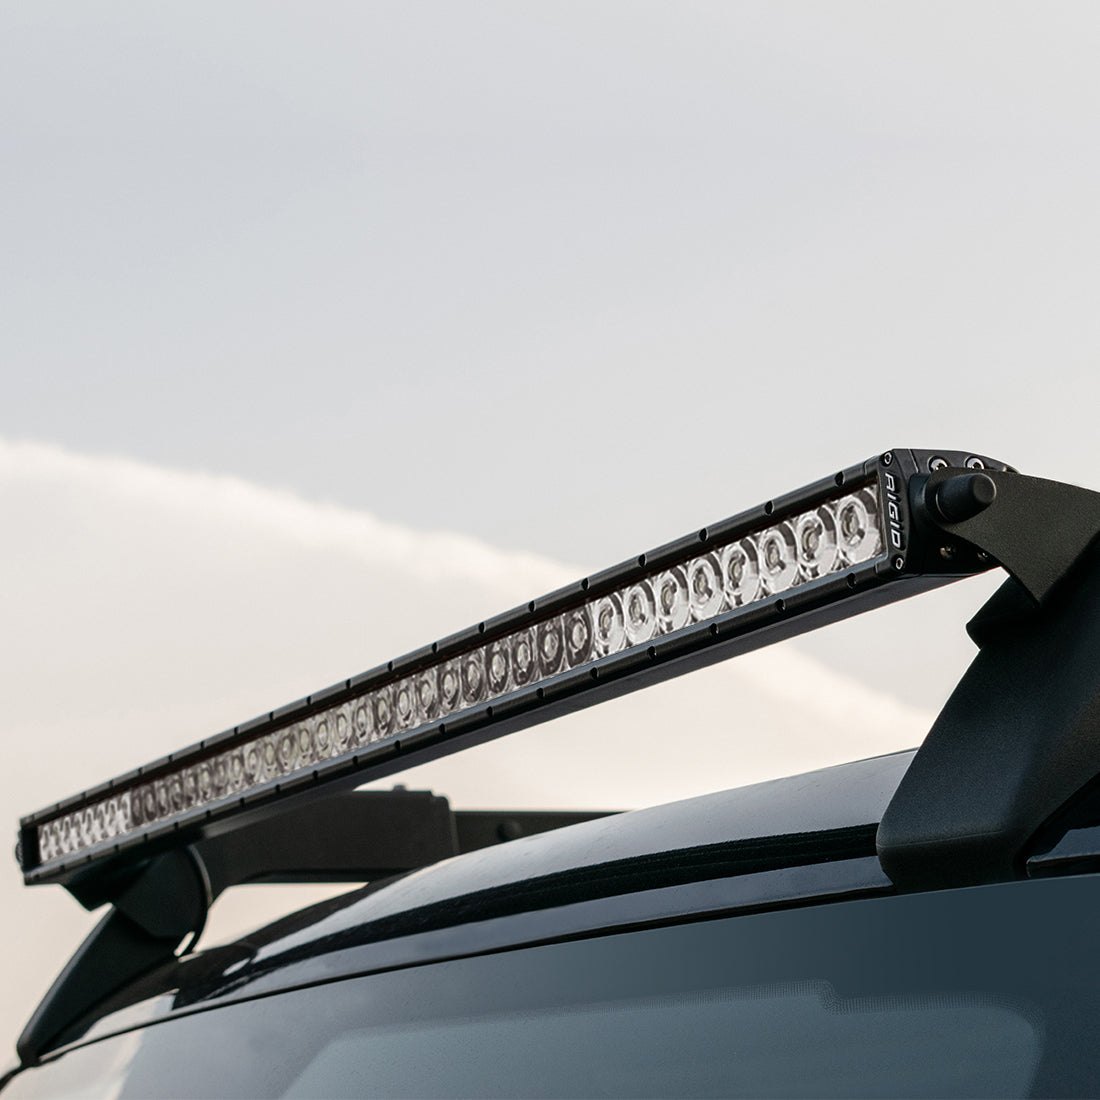 '21-23 Ford Bronco Rigid SR-Series LED Light Bar Roof Rack Kit display